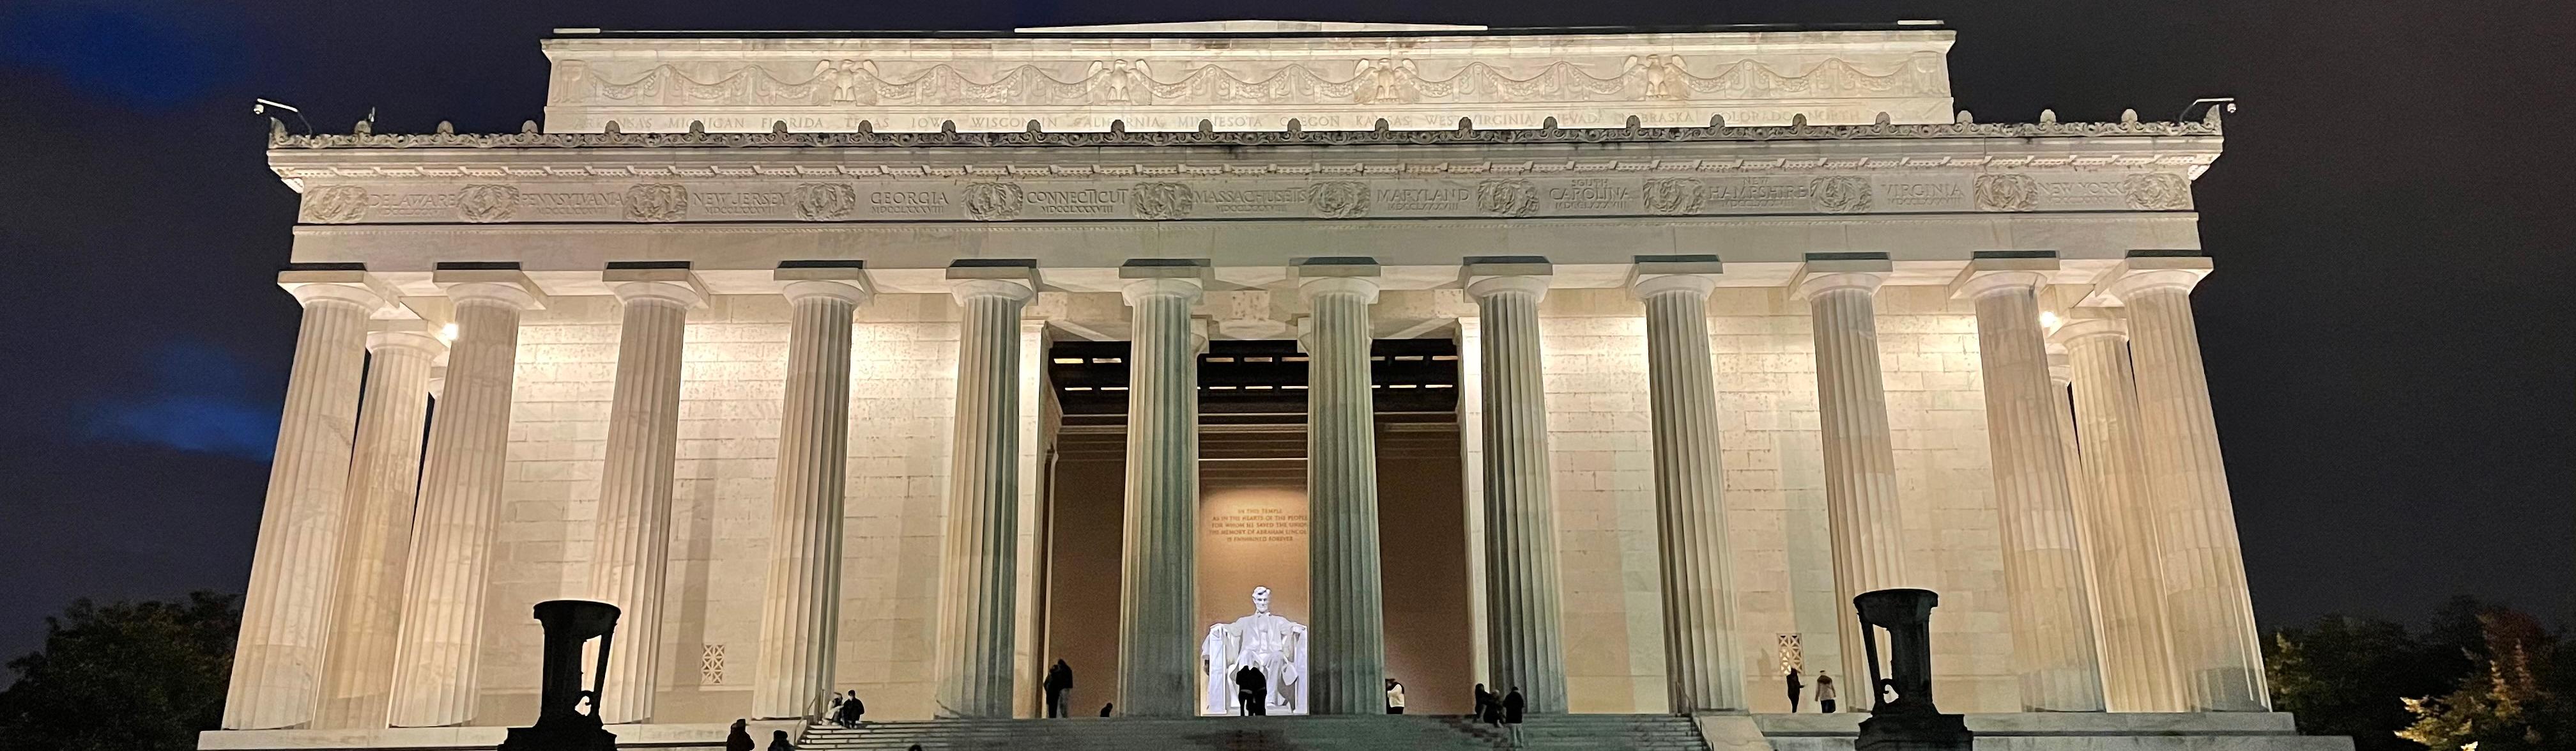 Lincoln Memorial (U.S. National Park Service)